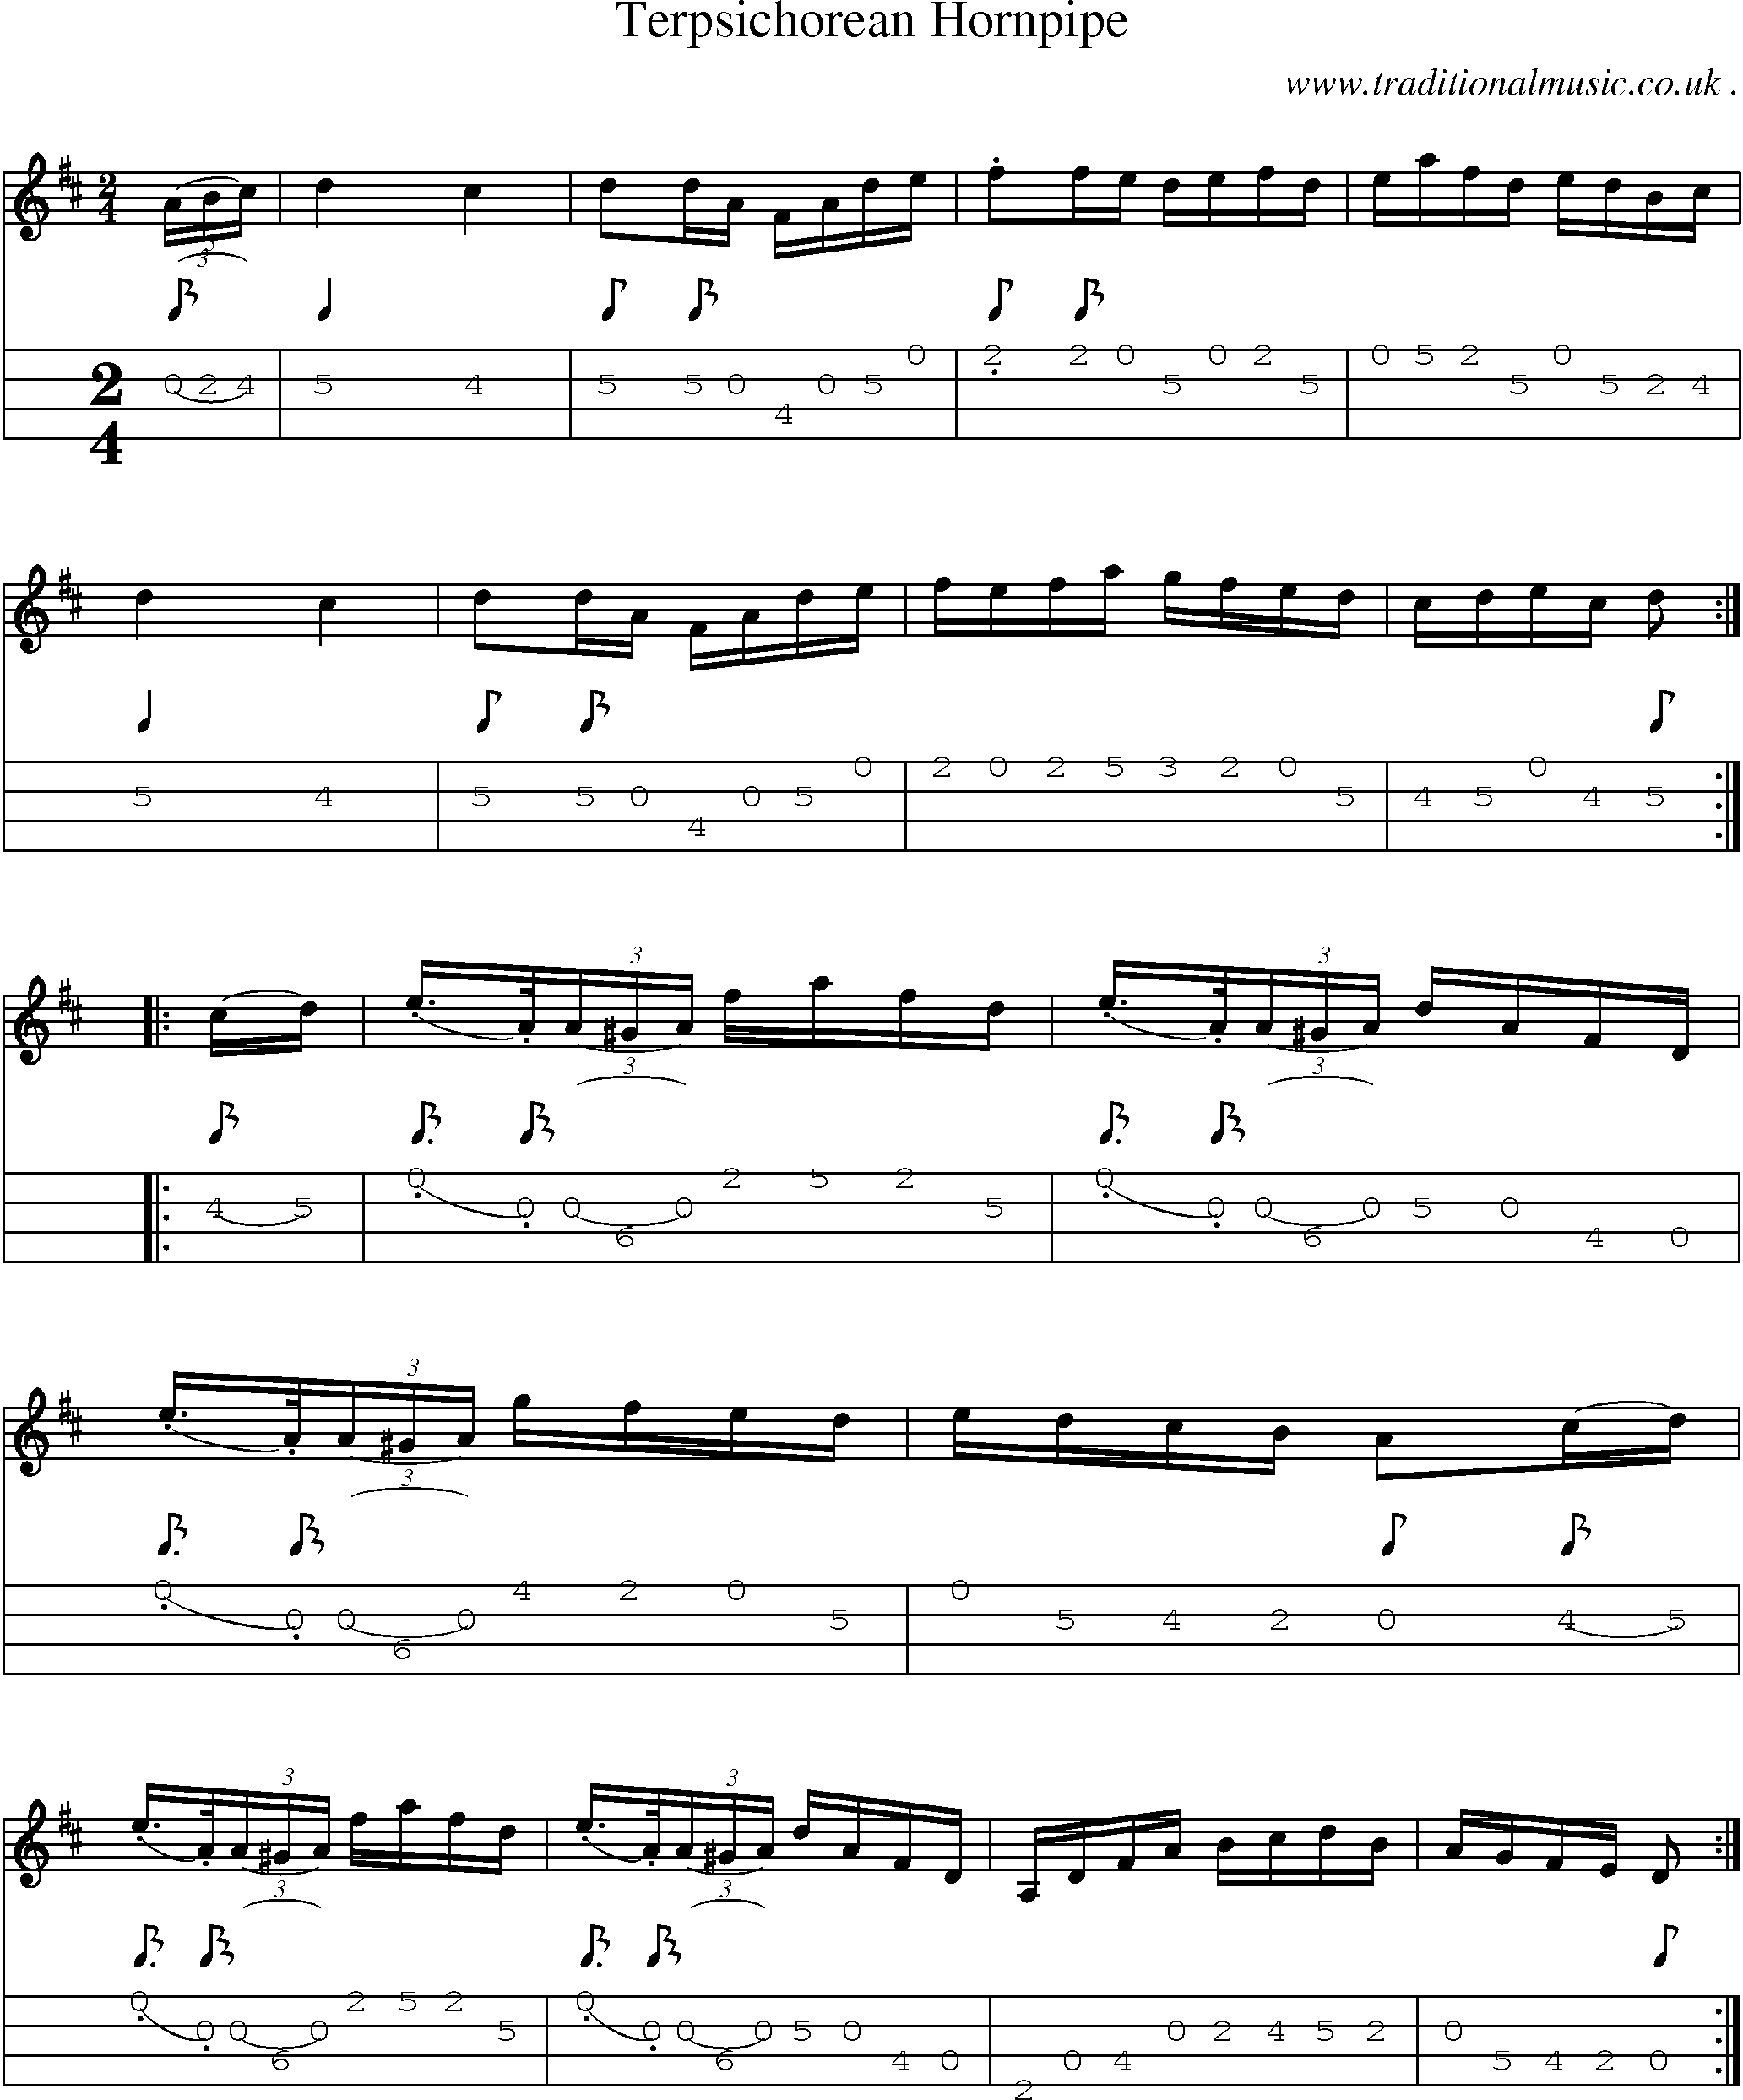 Sheet-Music and Mandolin Tabs for Terpsichorean Hornpipe